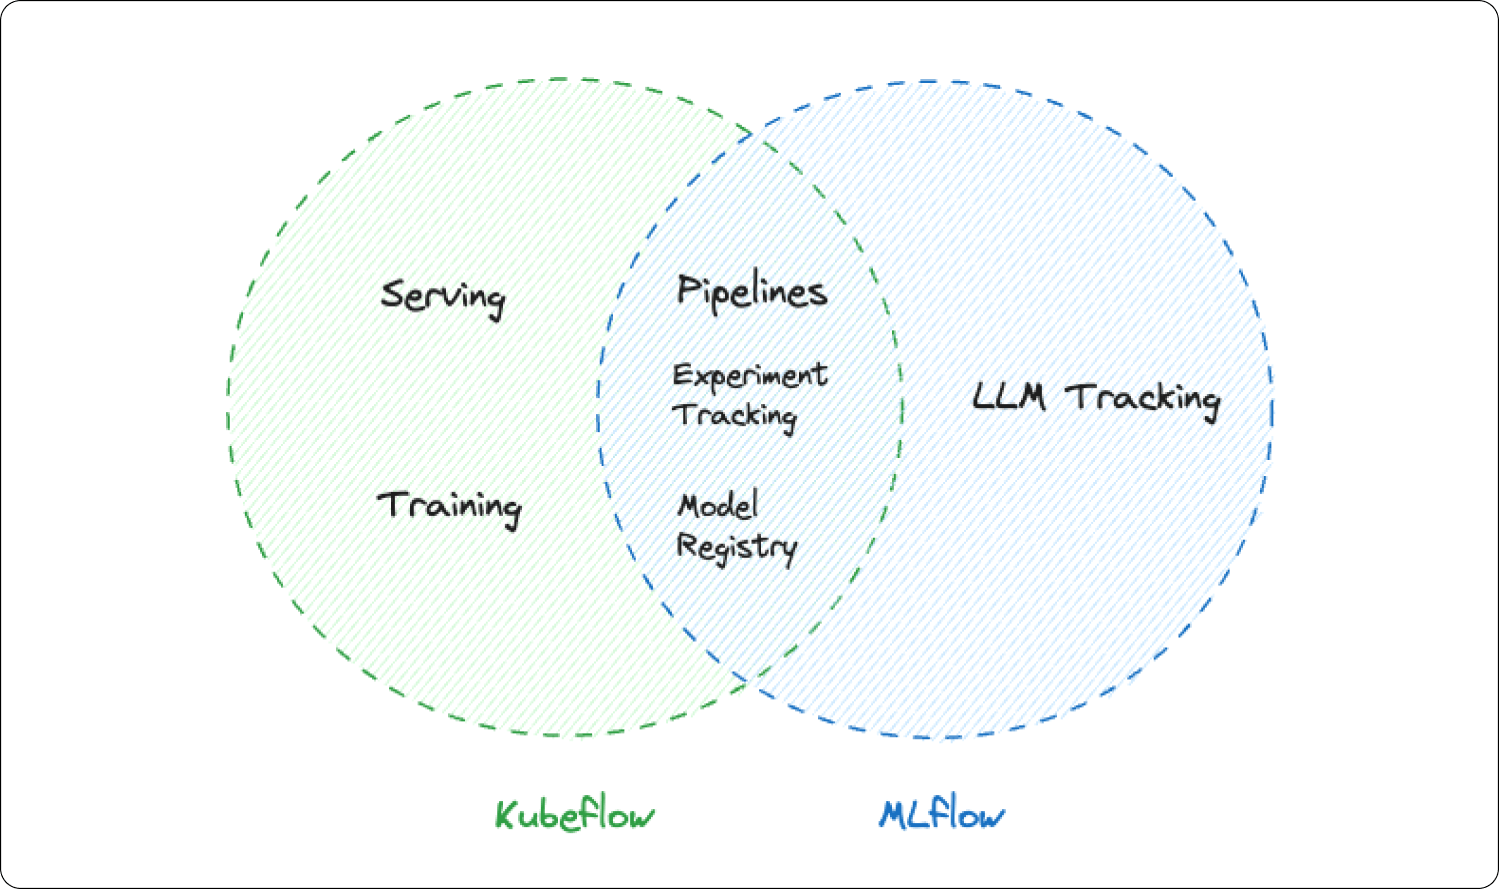 Overlapping capabilities - Kubeflow vs. MLflow